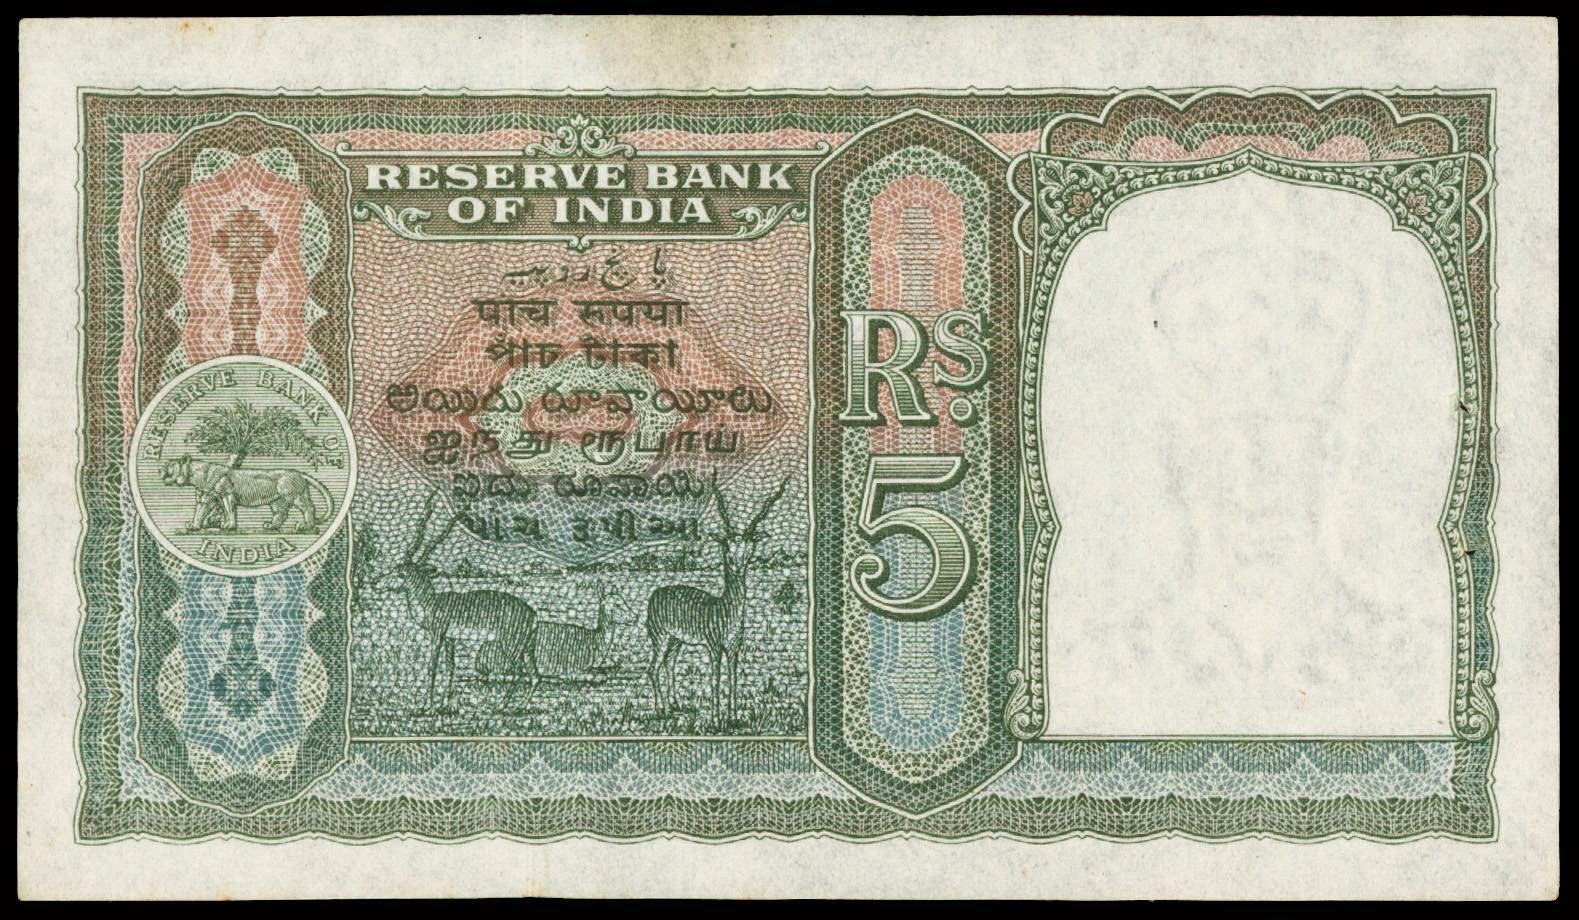 British India Notes 5 Rupee 1943 Reserve Bank of India